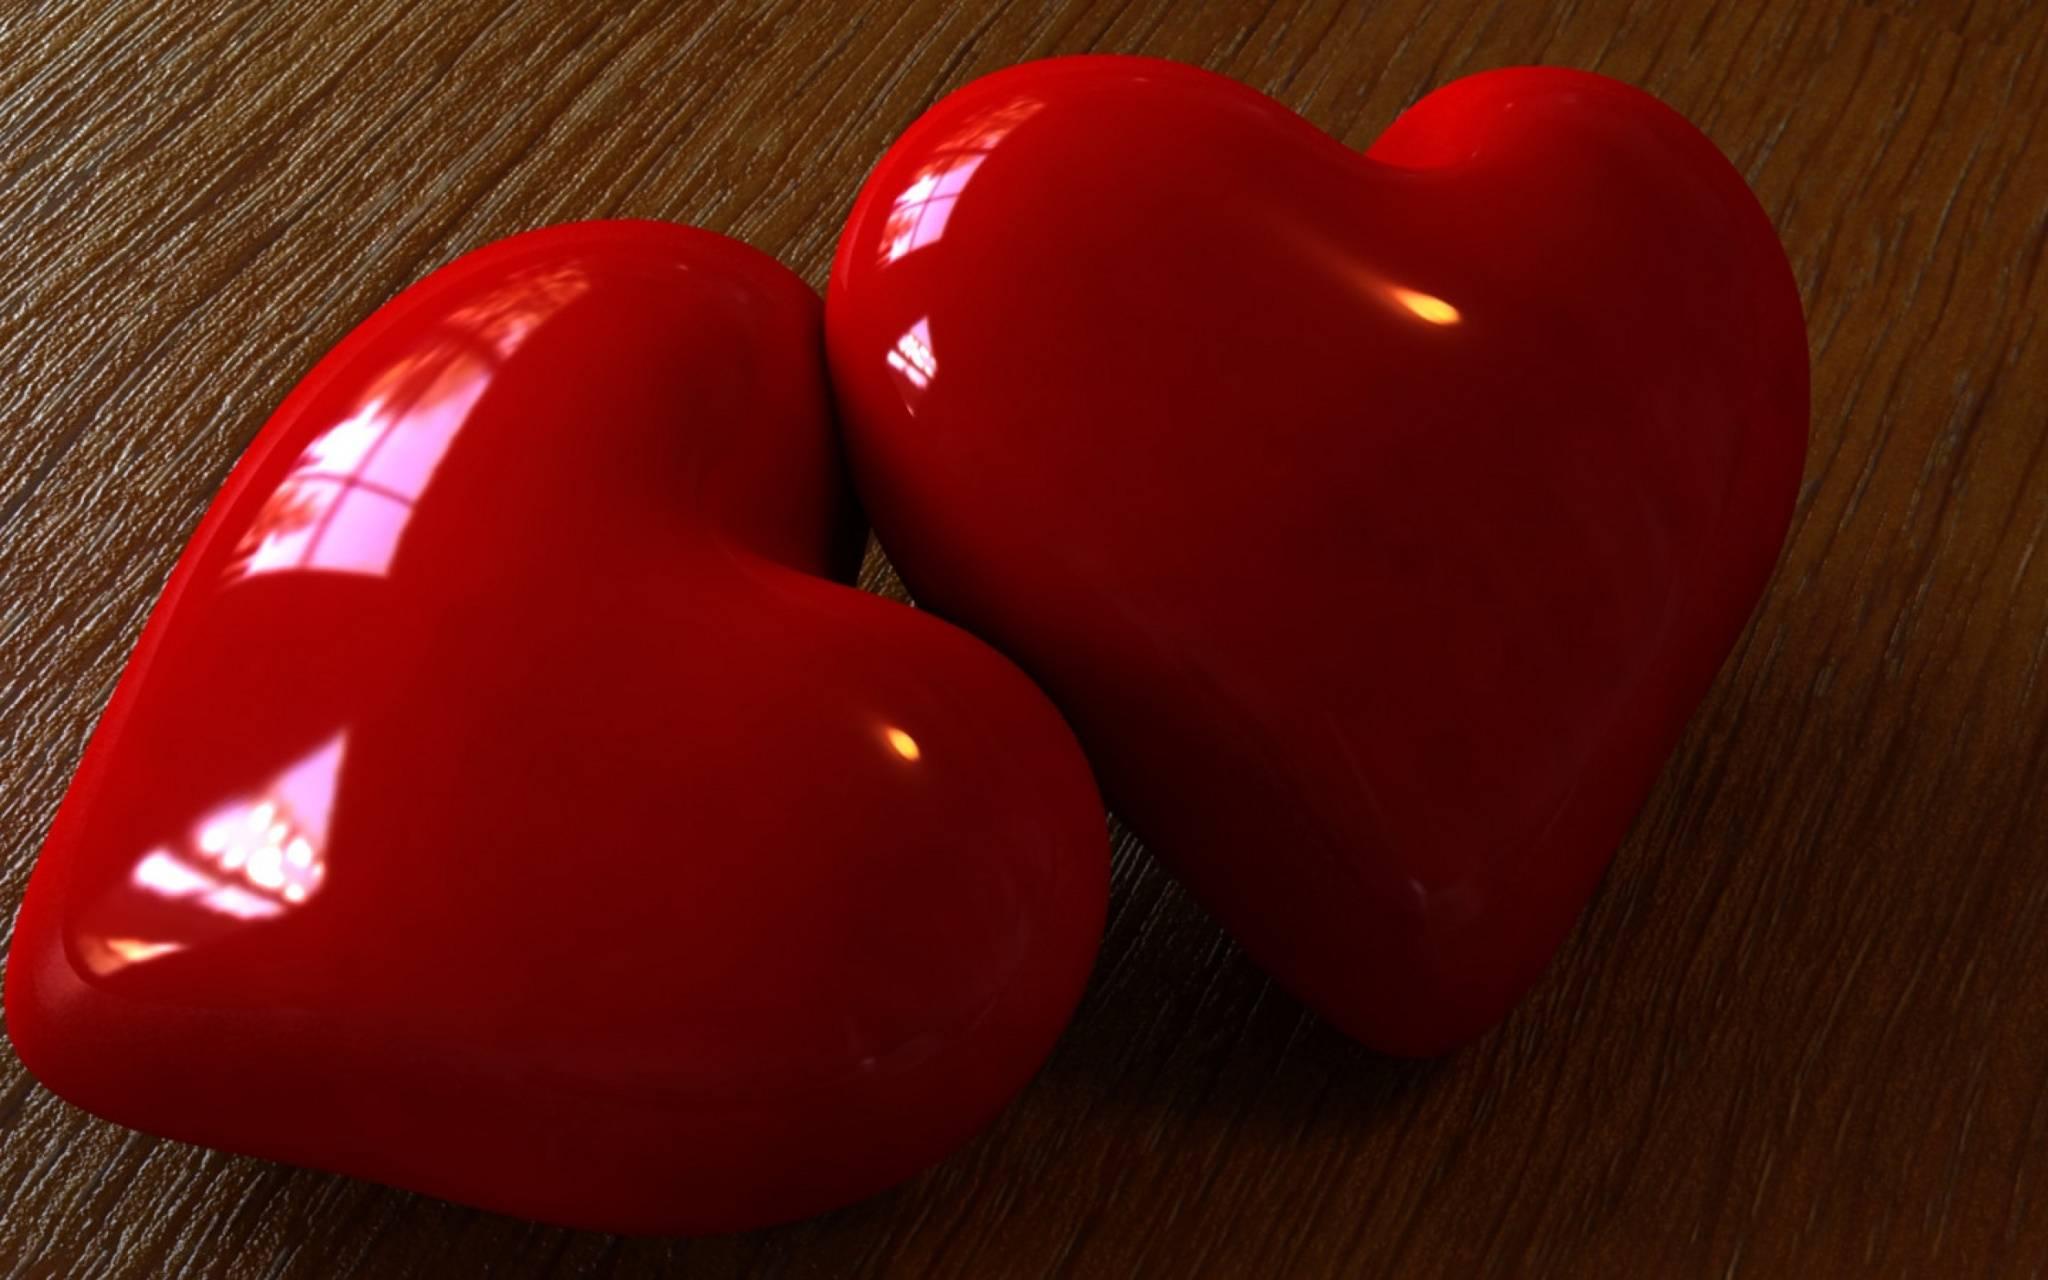 This love this heart. Сердце любовь. Красивое сердце. Сердечки картинки. С красным сердцем.